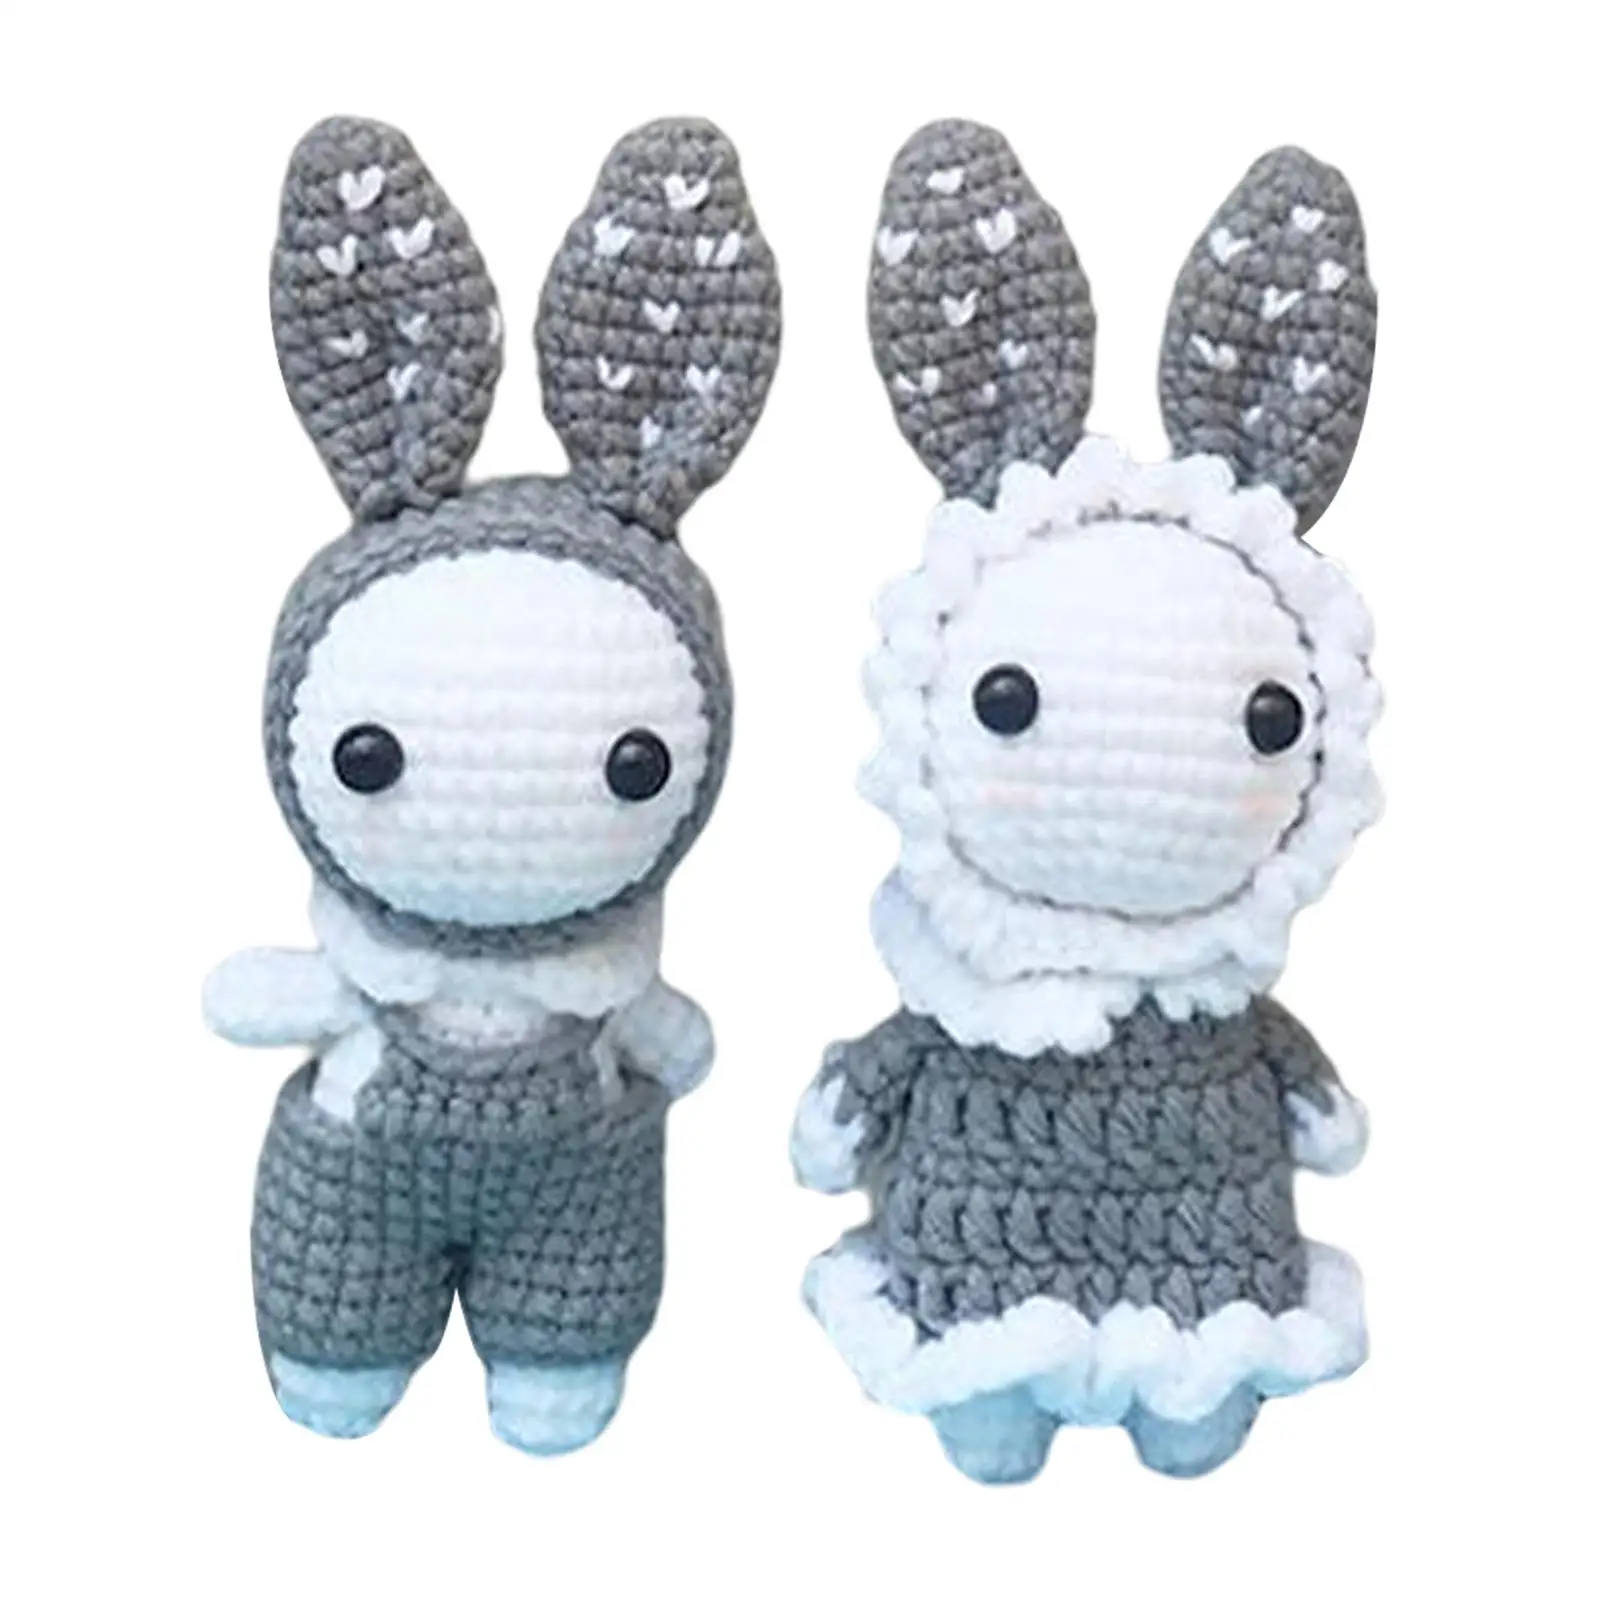 Handmade DIY Crochet Set Rabbits Starter Pack for Adults and